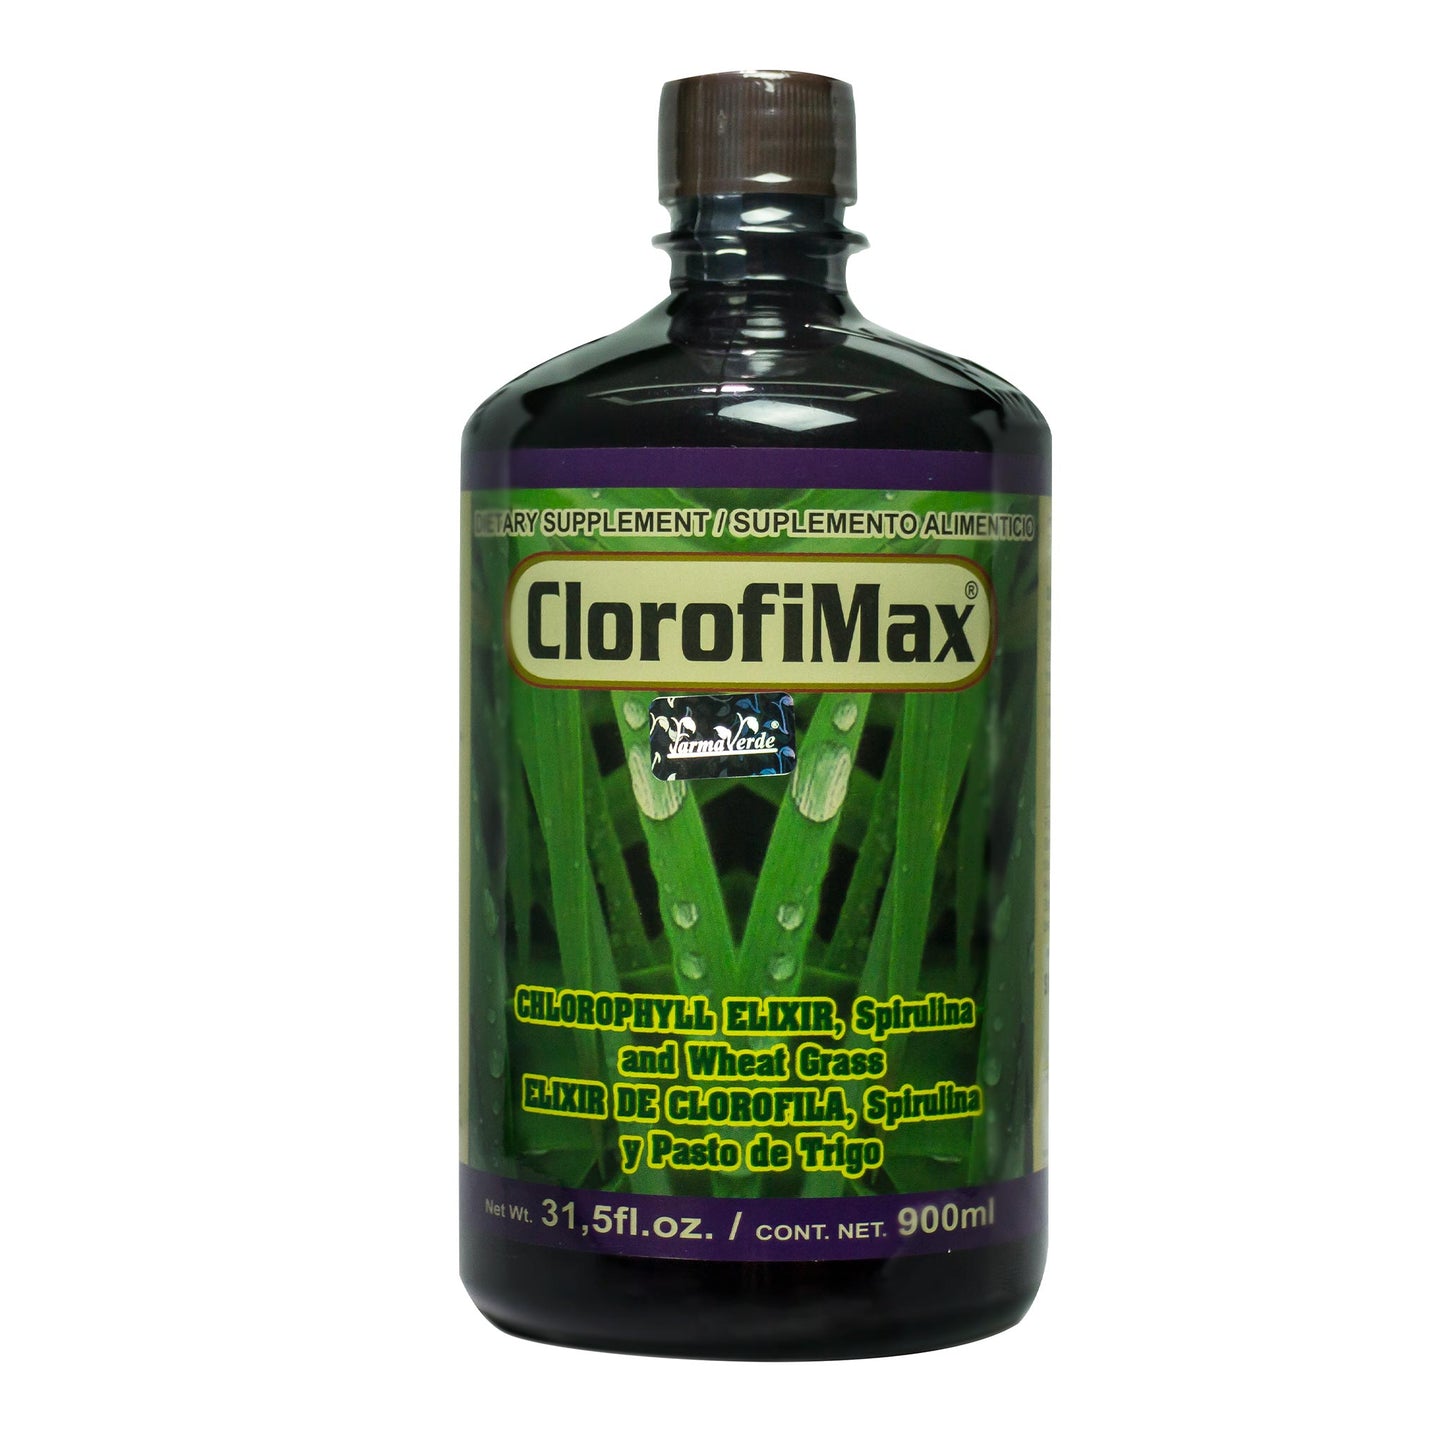 CLOROFIMAX ® elixir botella de 900ml